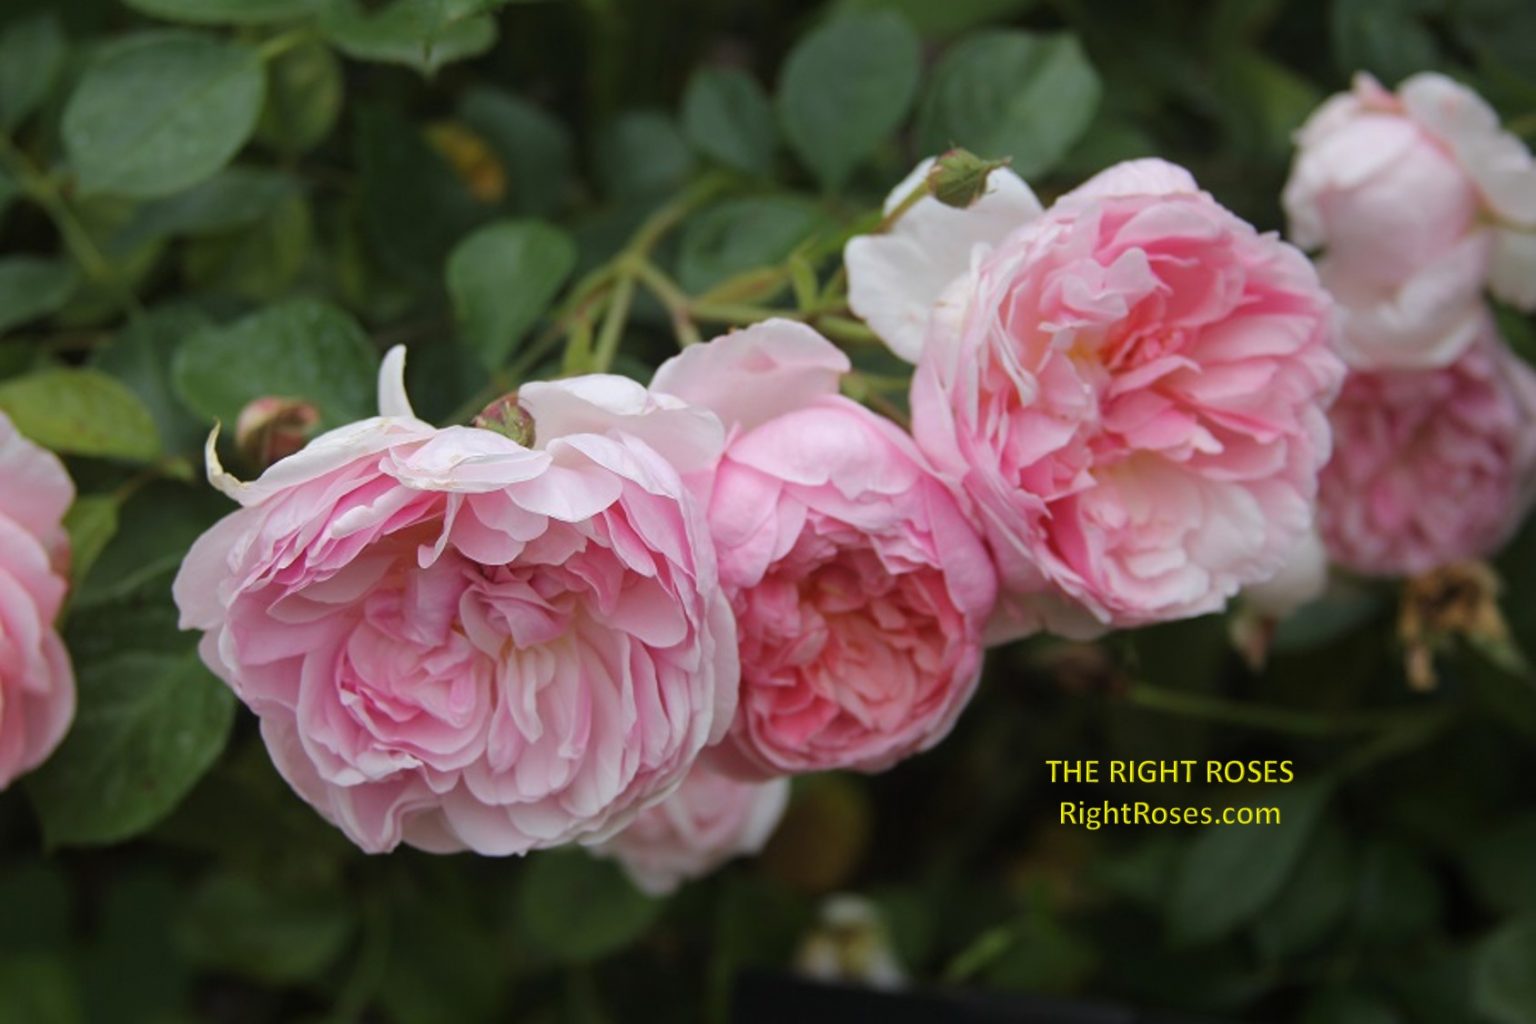 ANNE BOLEYN ROSE REVIEW | DAVID AUSTIN 1999 - THE RIGHT ROSES